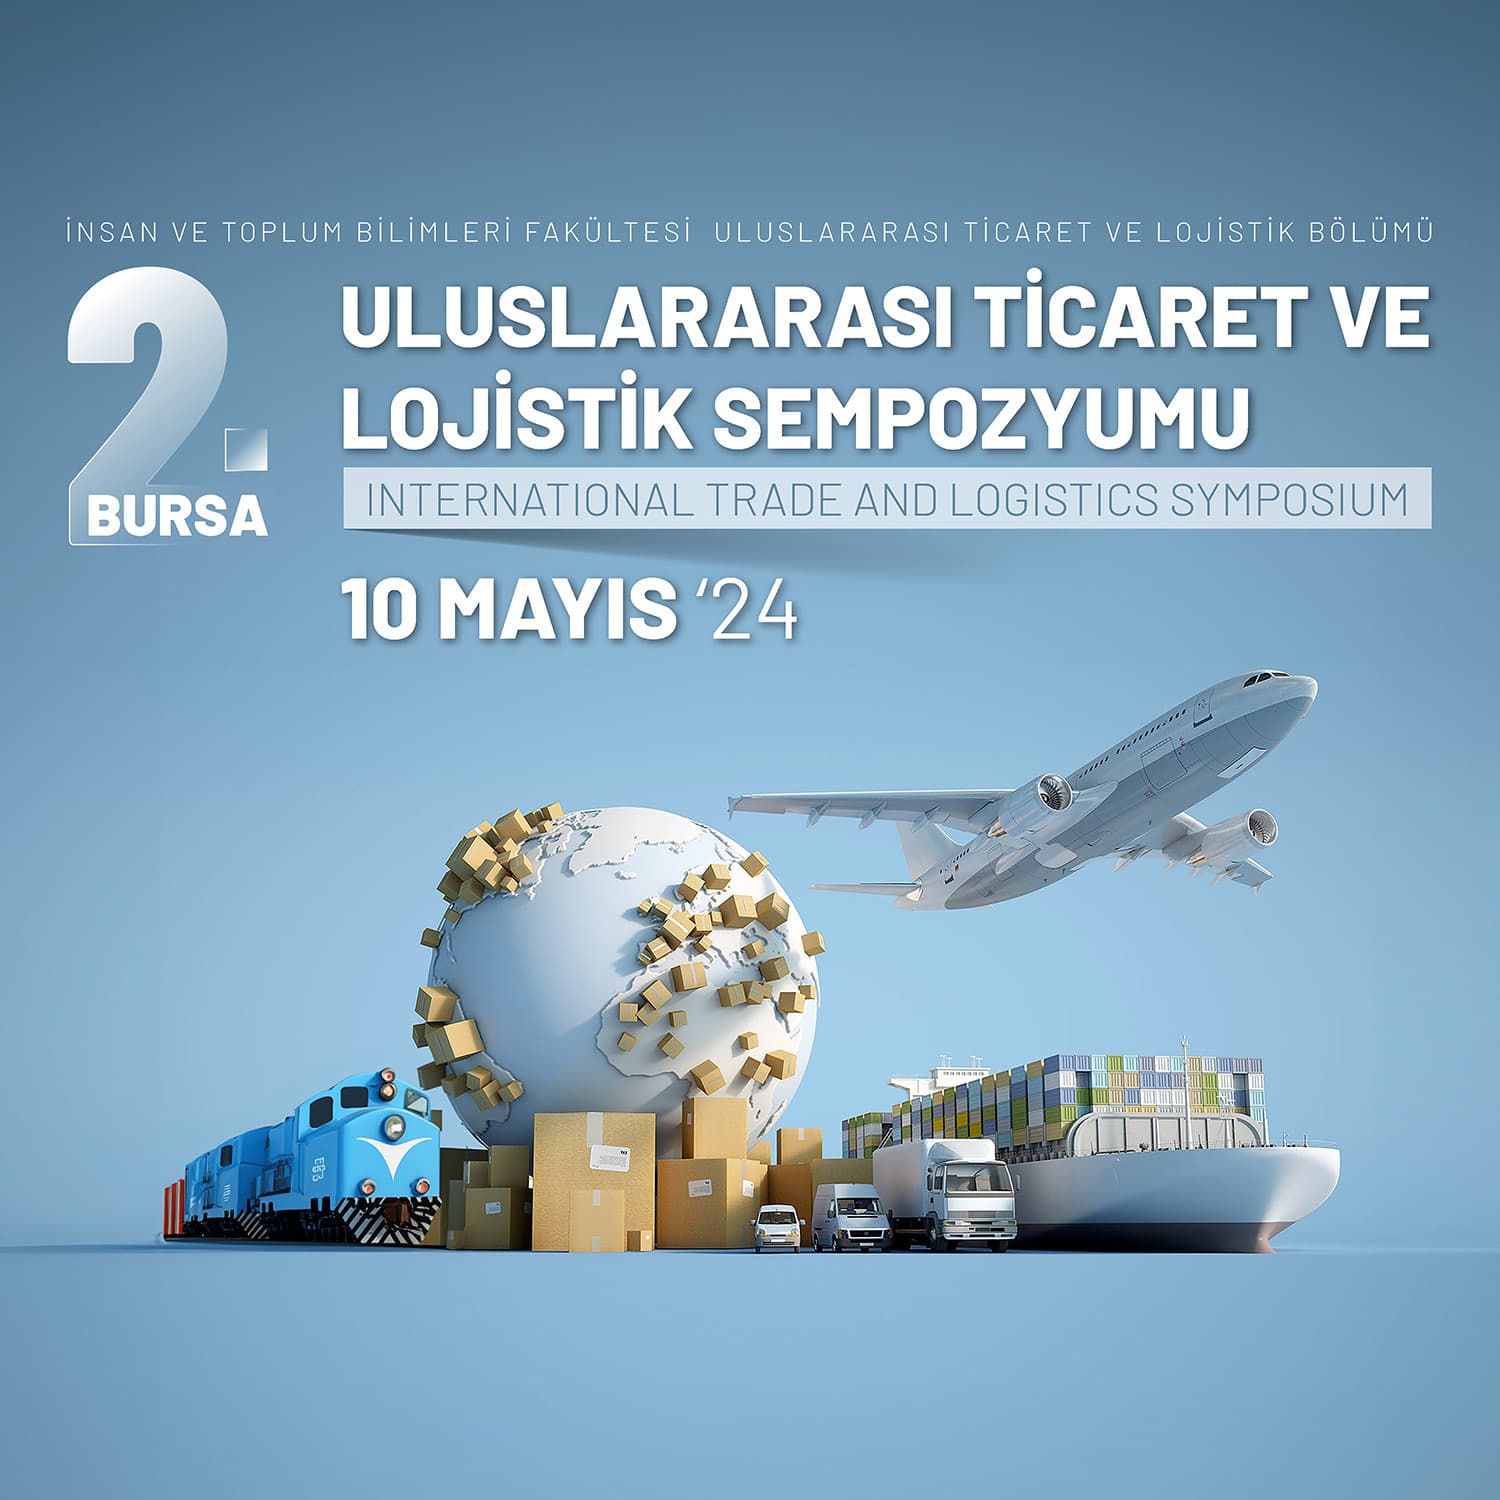 II. Bursa International Trade andLogistics Symposium